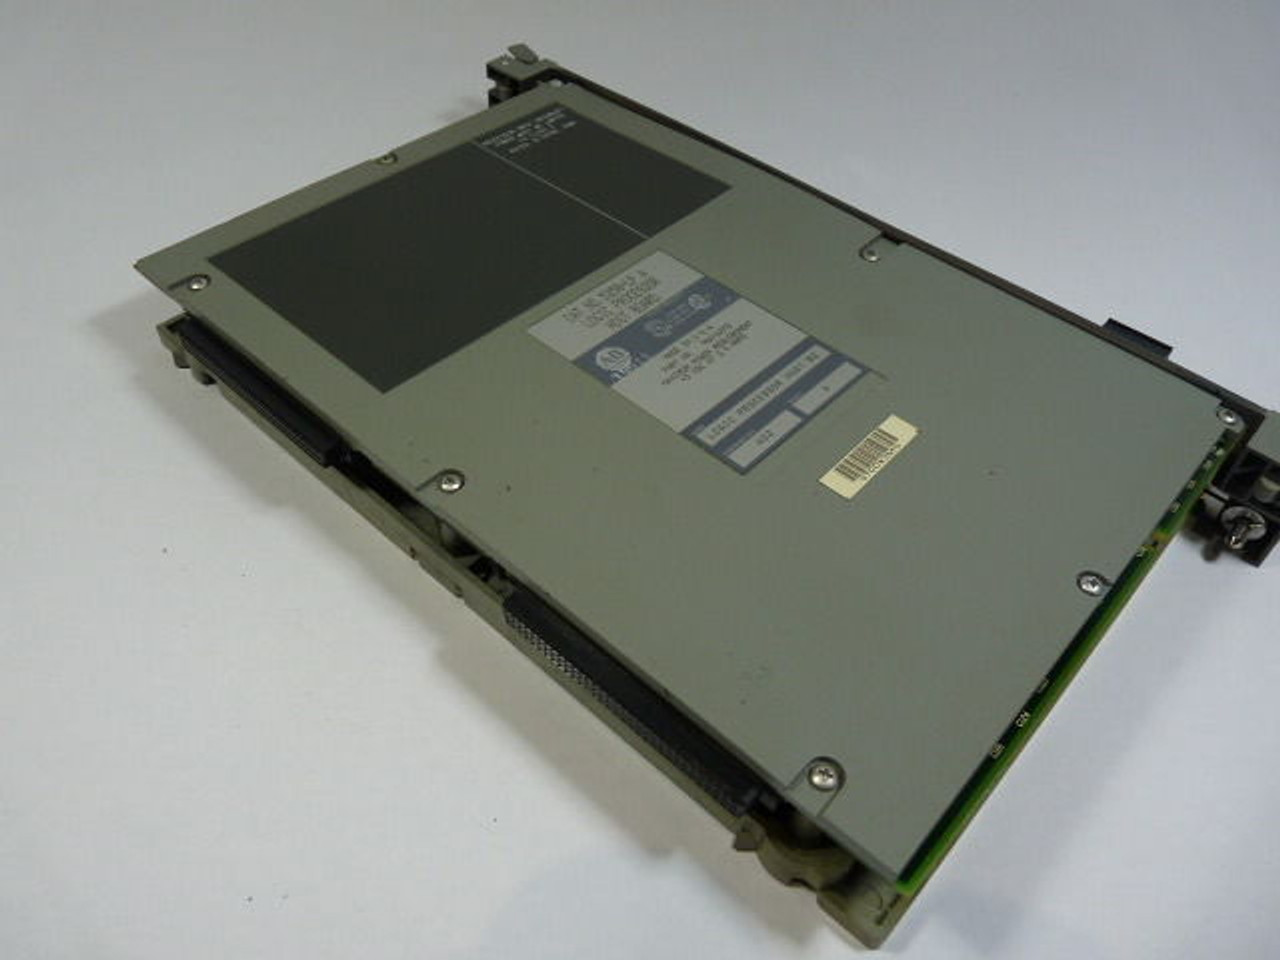 Allen-Bradley 5250-LP Logic Processor Module Series A FW Rev A02 USED